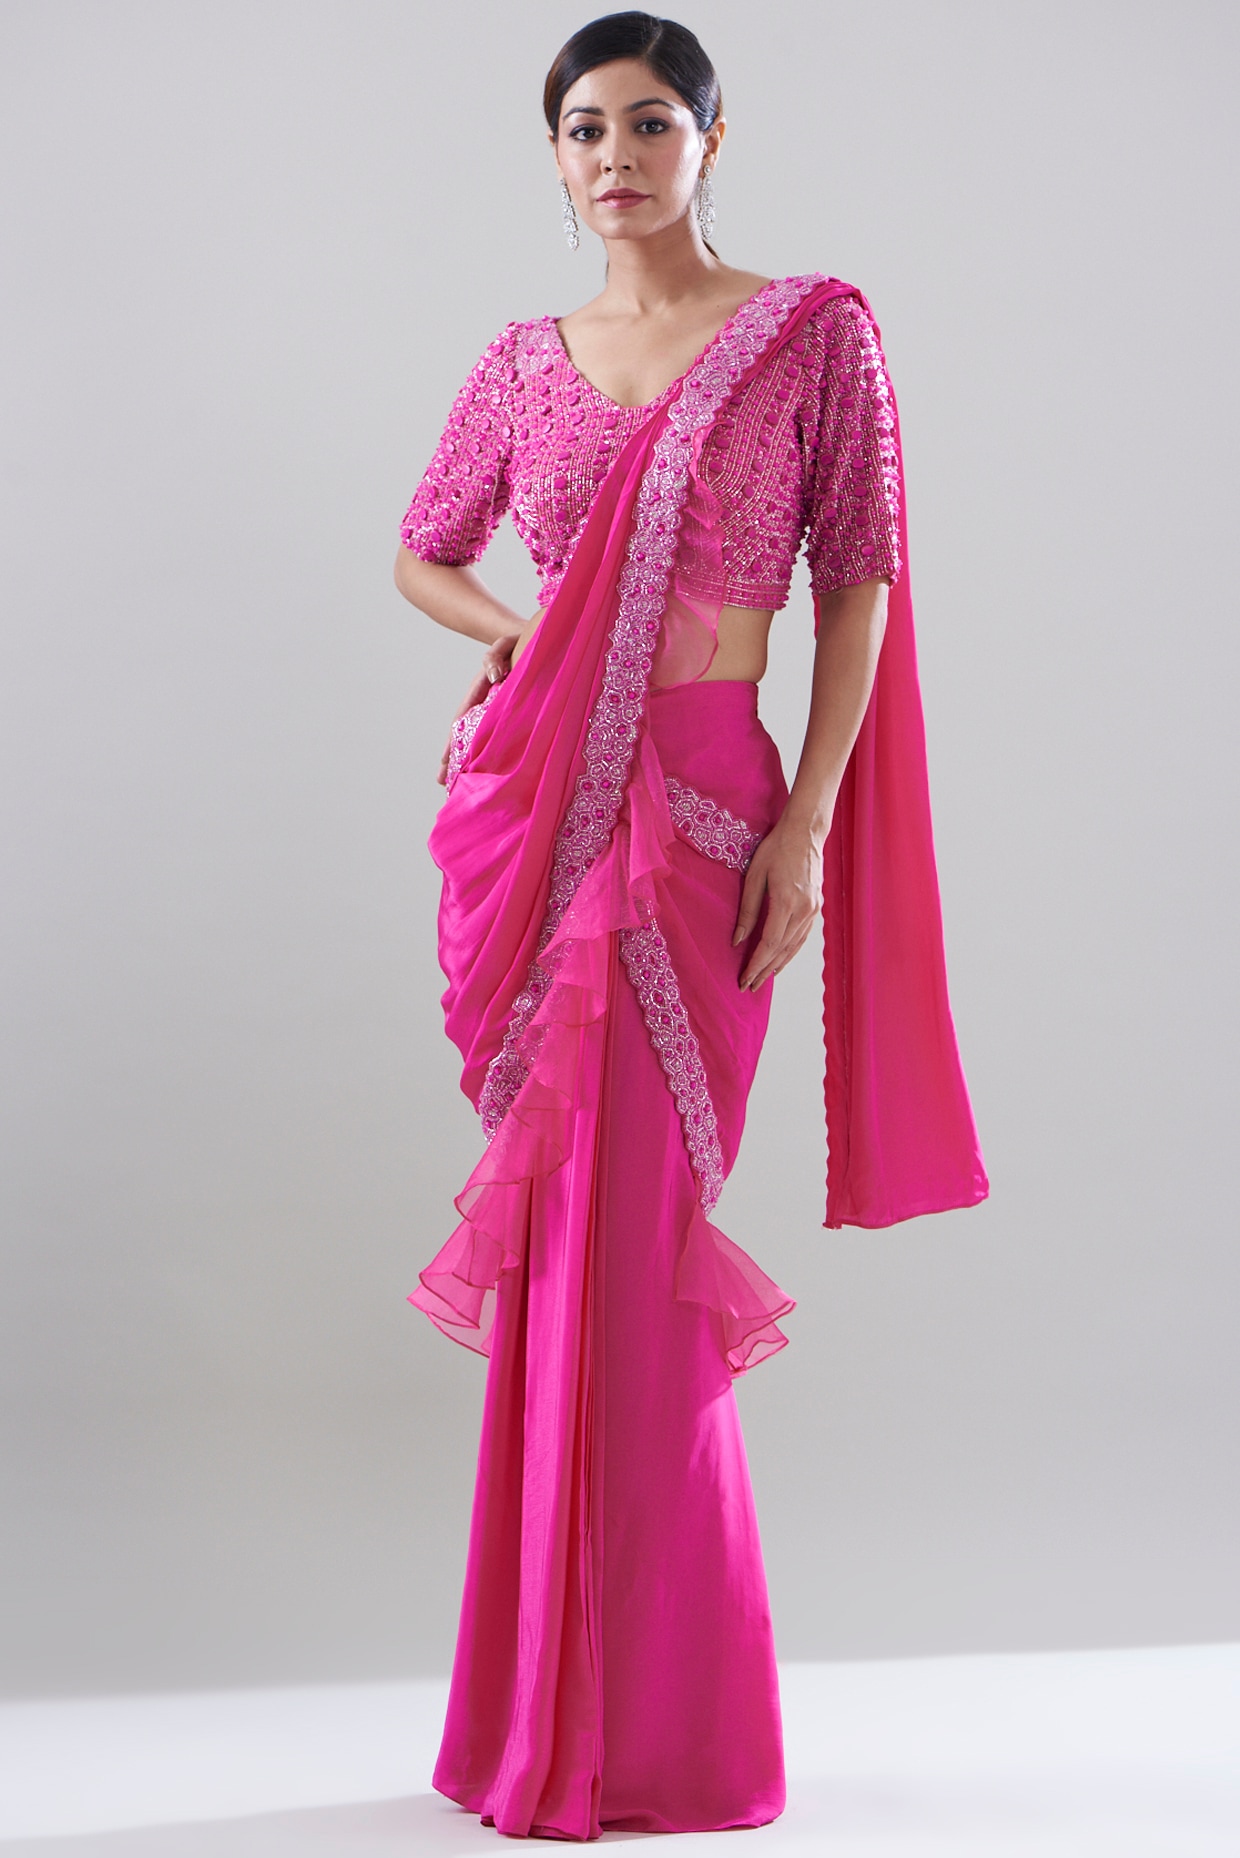 Saree | Bright Pink Saree | Blouse design | Floral saree and blouse |  Outfit ideas | Blouse neck design | Belleindiana- Instagram